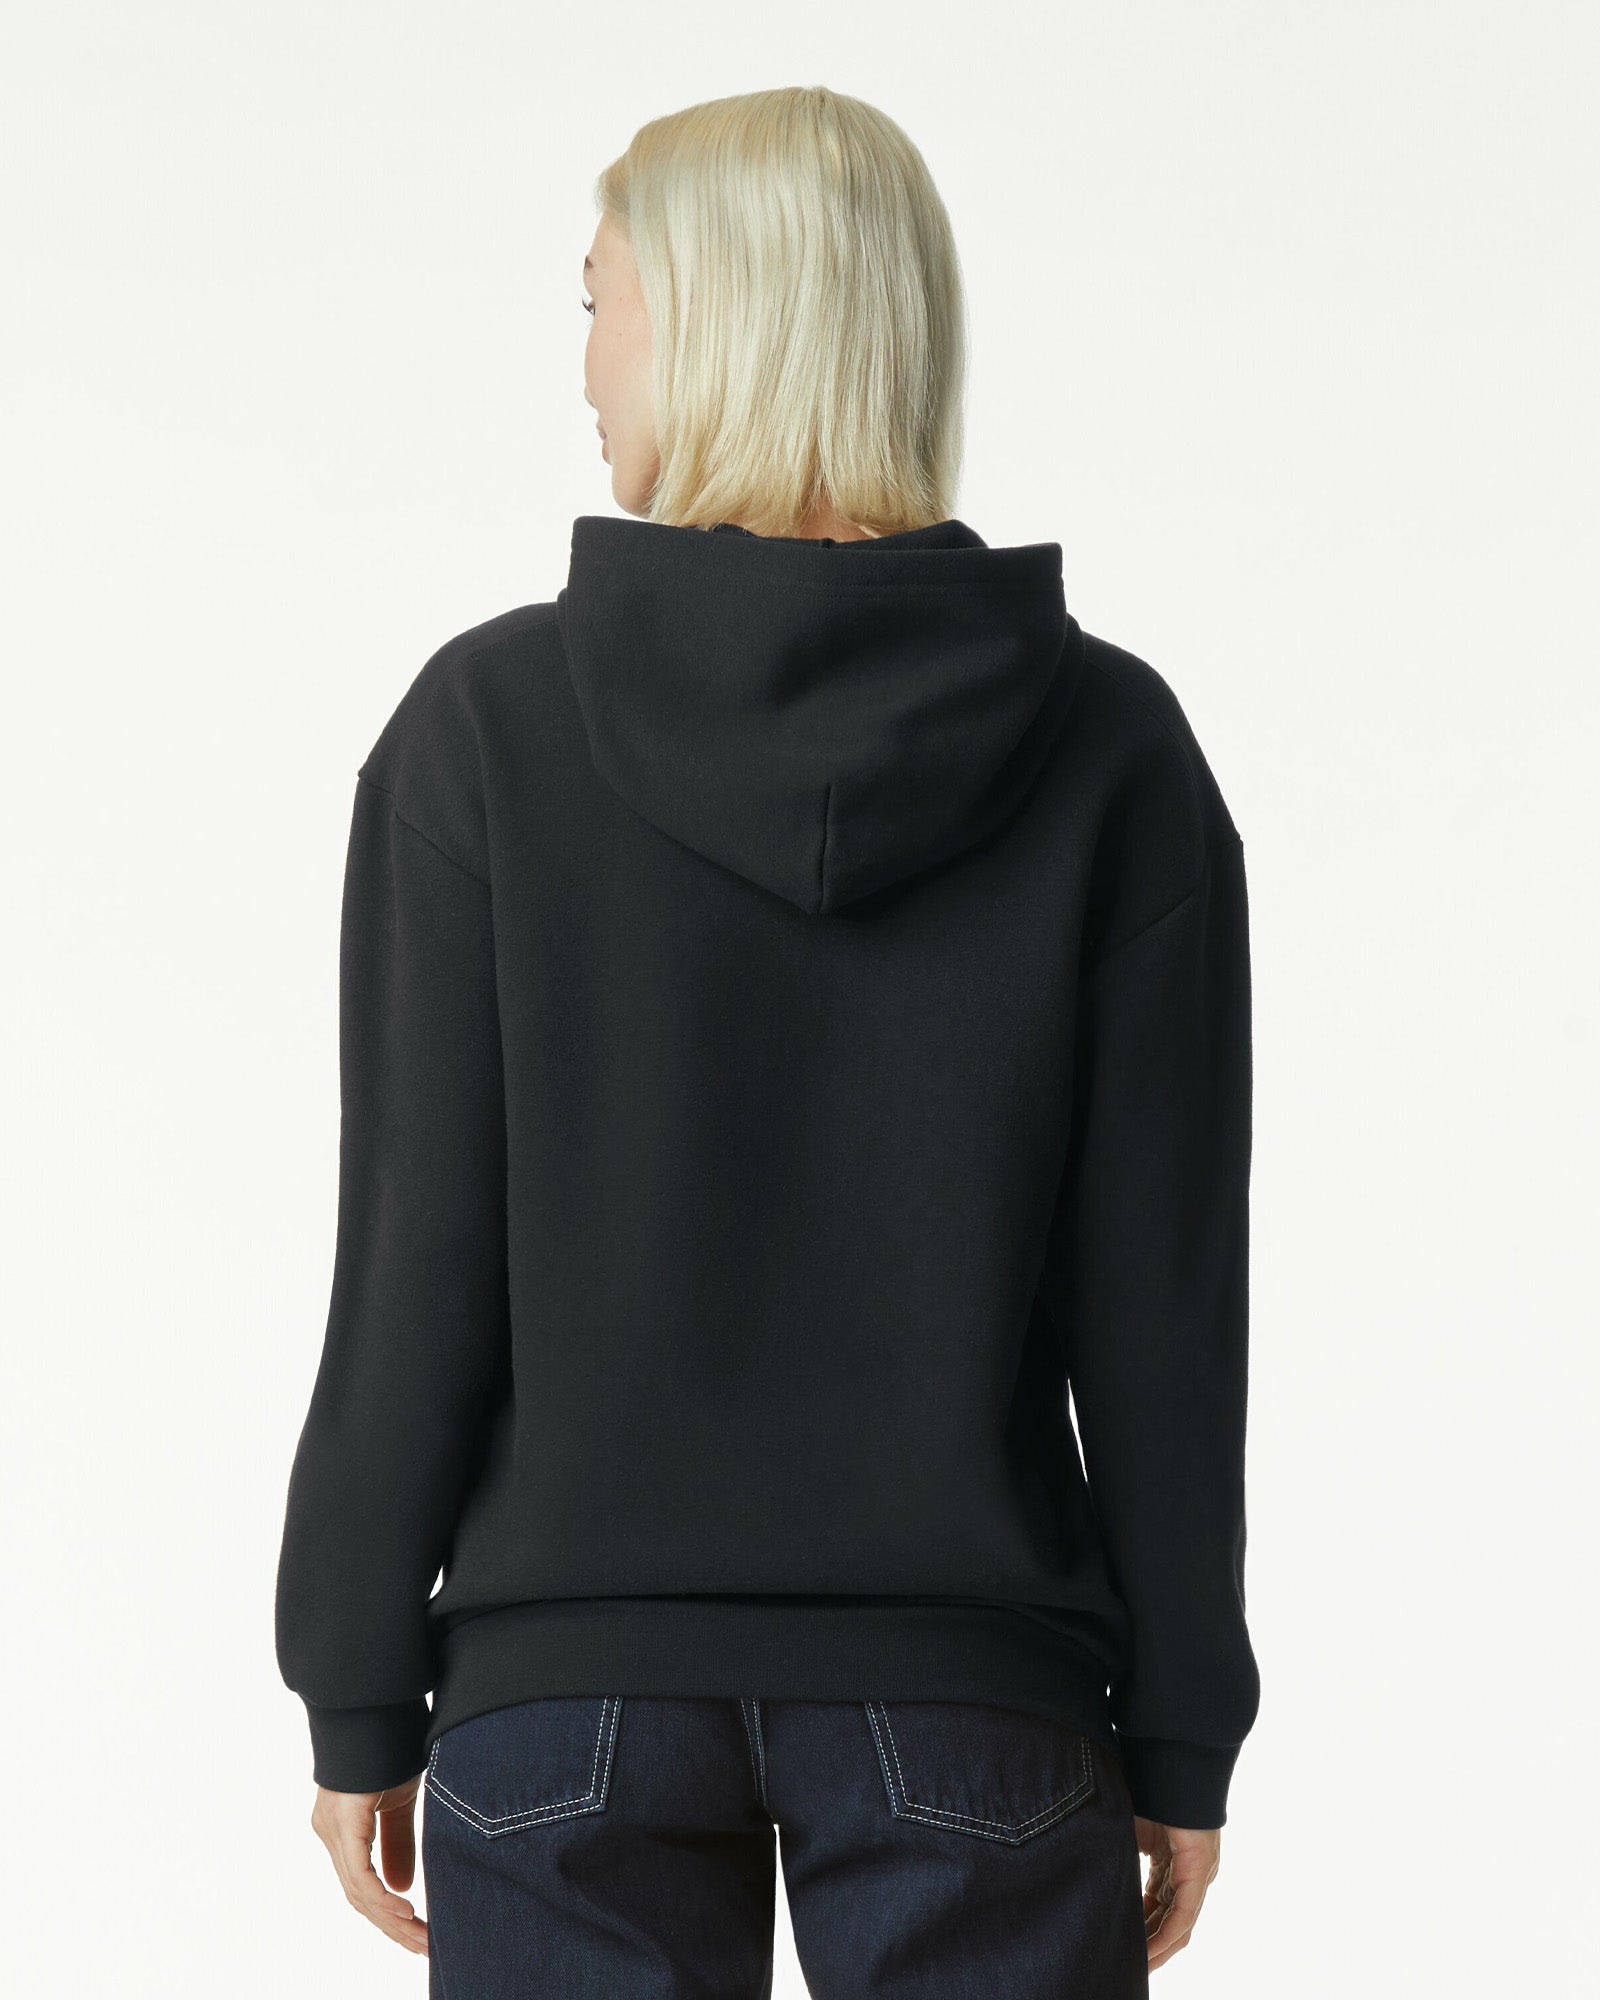 Reflex Unisex Hooded Sweatshirt - Black